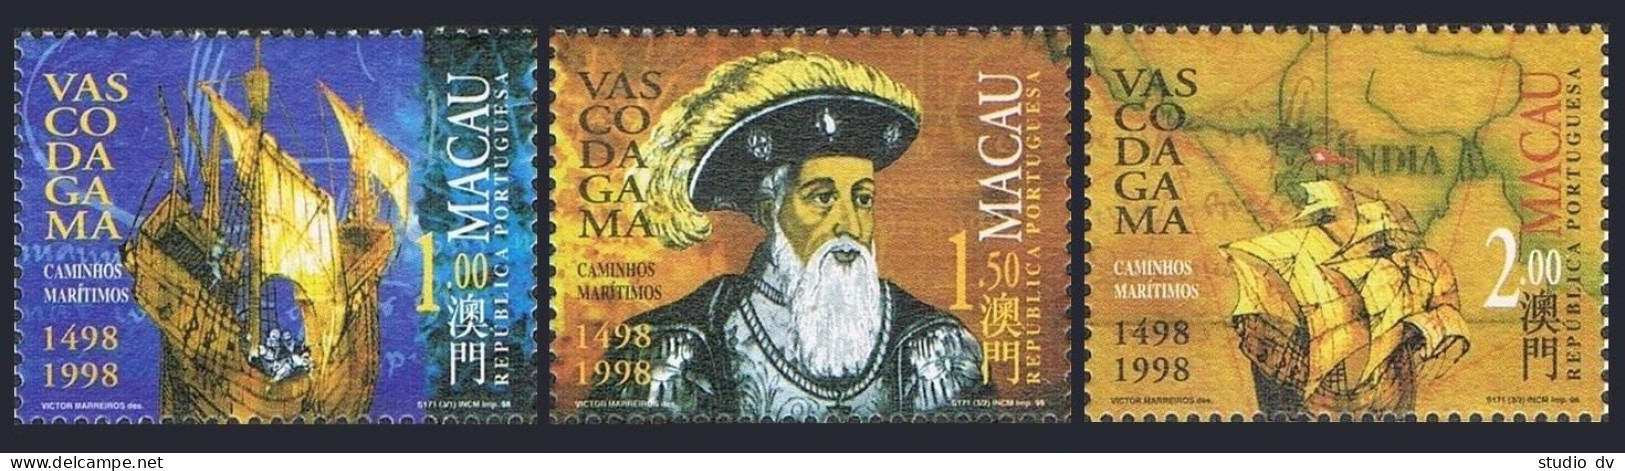 Macao 943-945a Strip, 946, 946a Overprinted, MNH. Vasco Da Gama, 1498-1998. - Ongebruikt